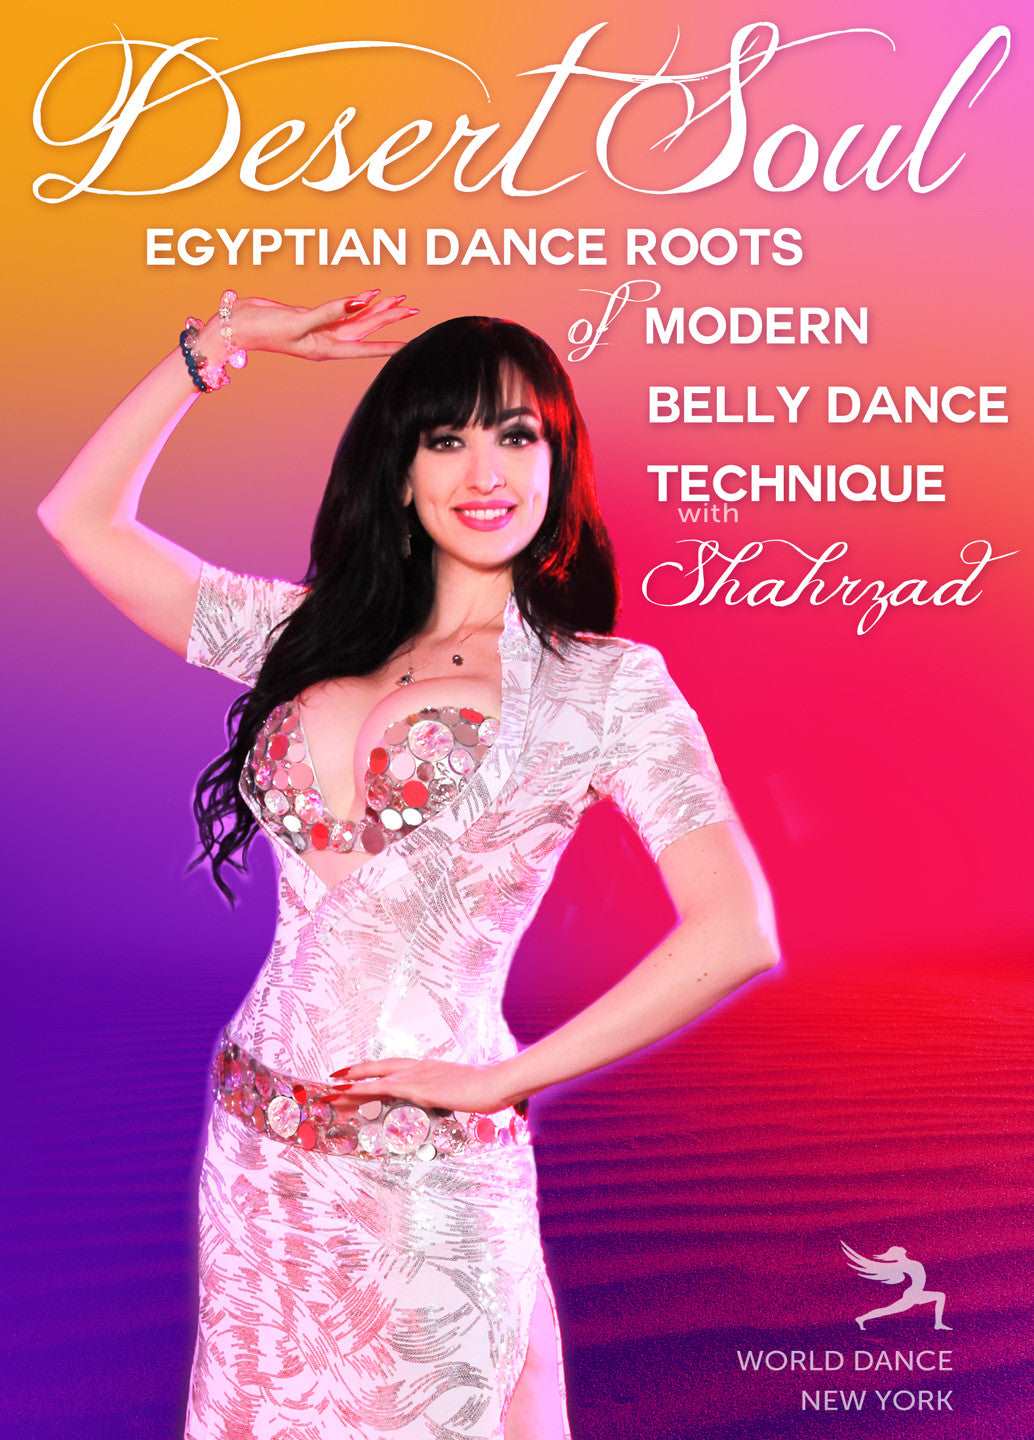 "Desert Soul - Egyptian Dance Roots of Modern Belly Dance Technique" DVD with Shahrzad - World Dance New York